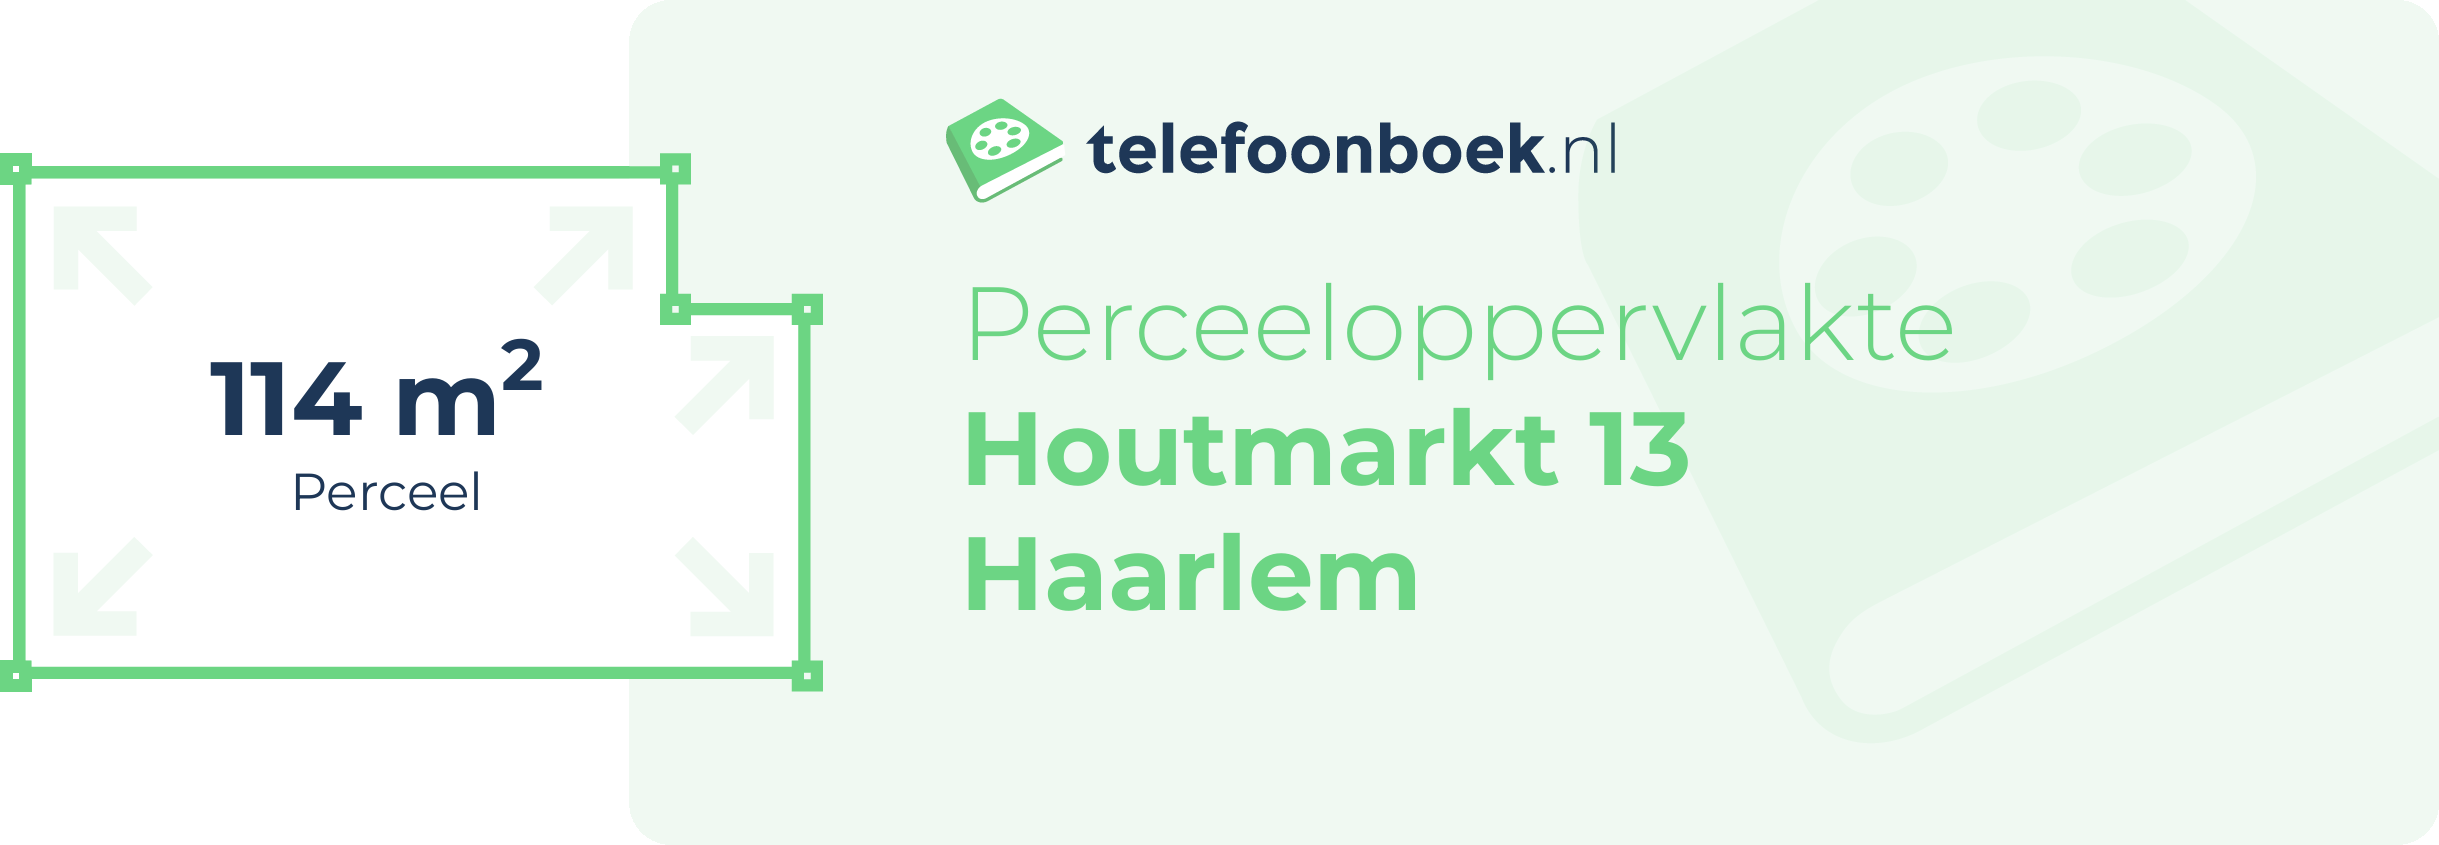 Perceeloppervlakte Houtmarkt 13 Haarlem